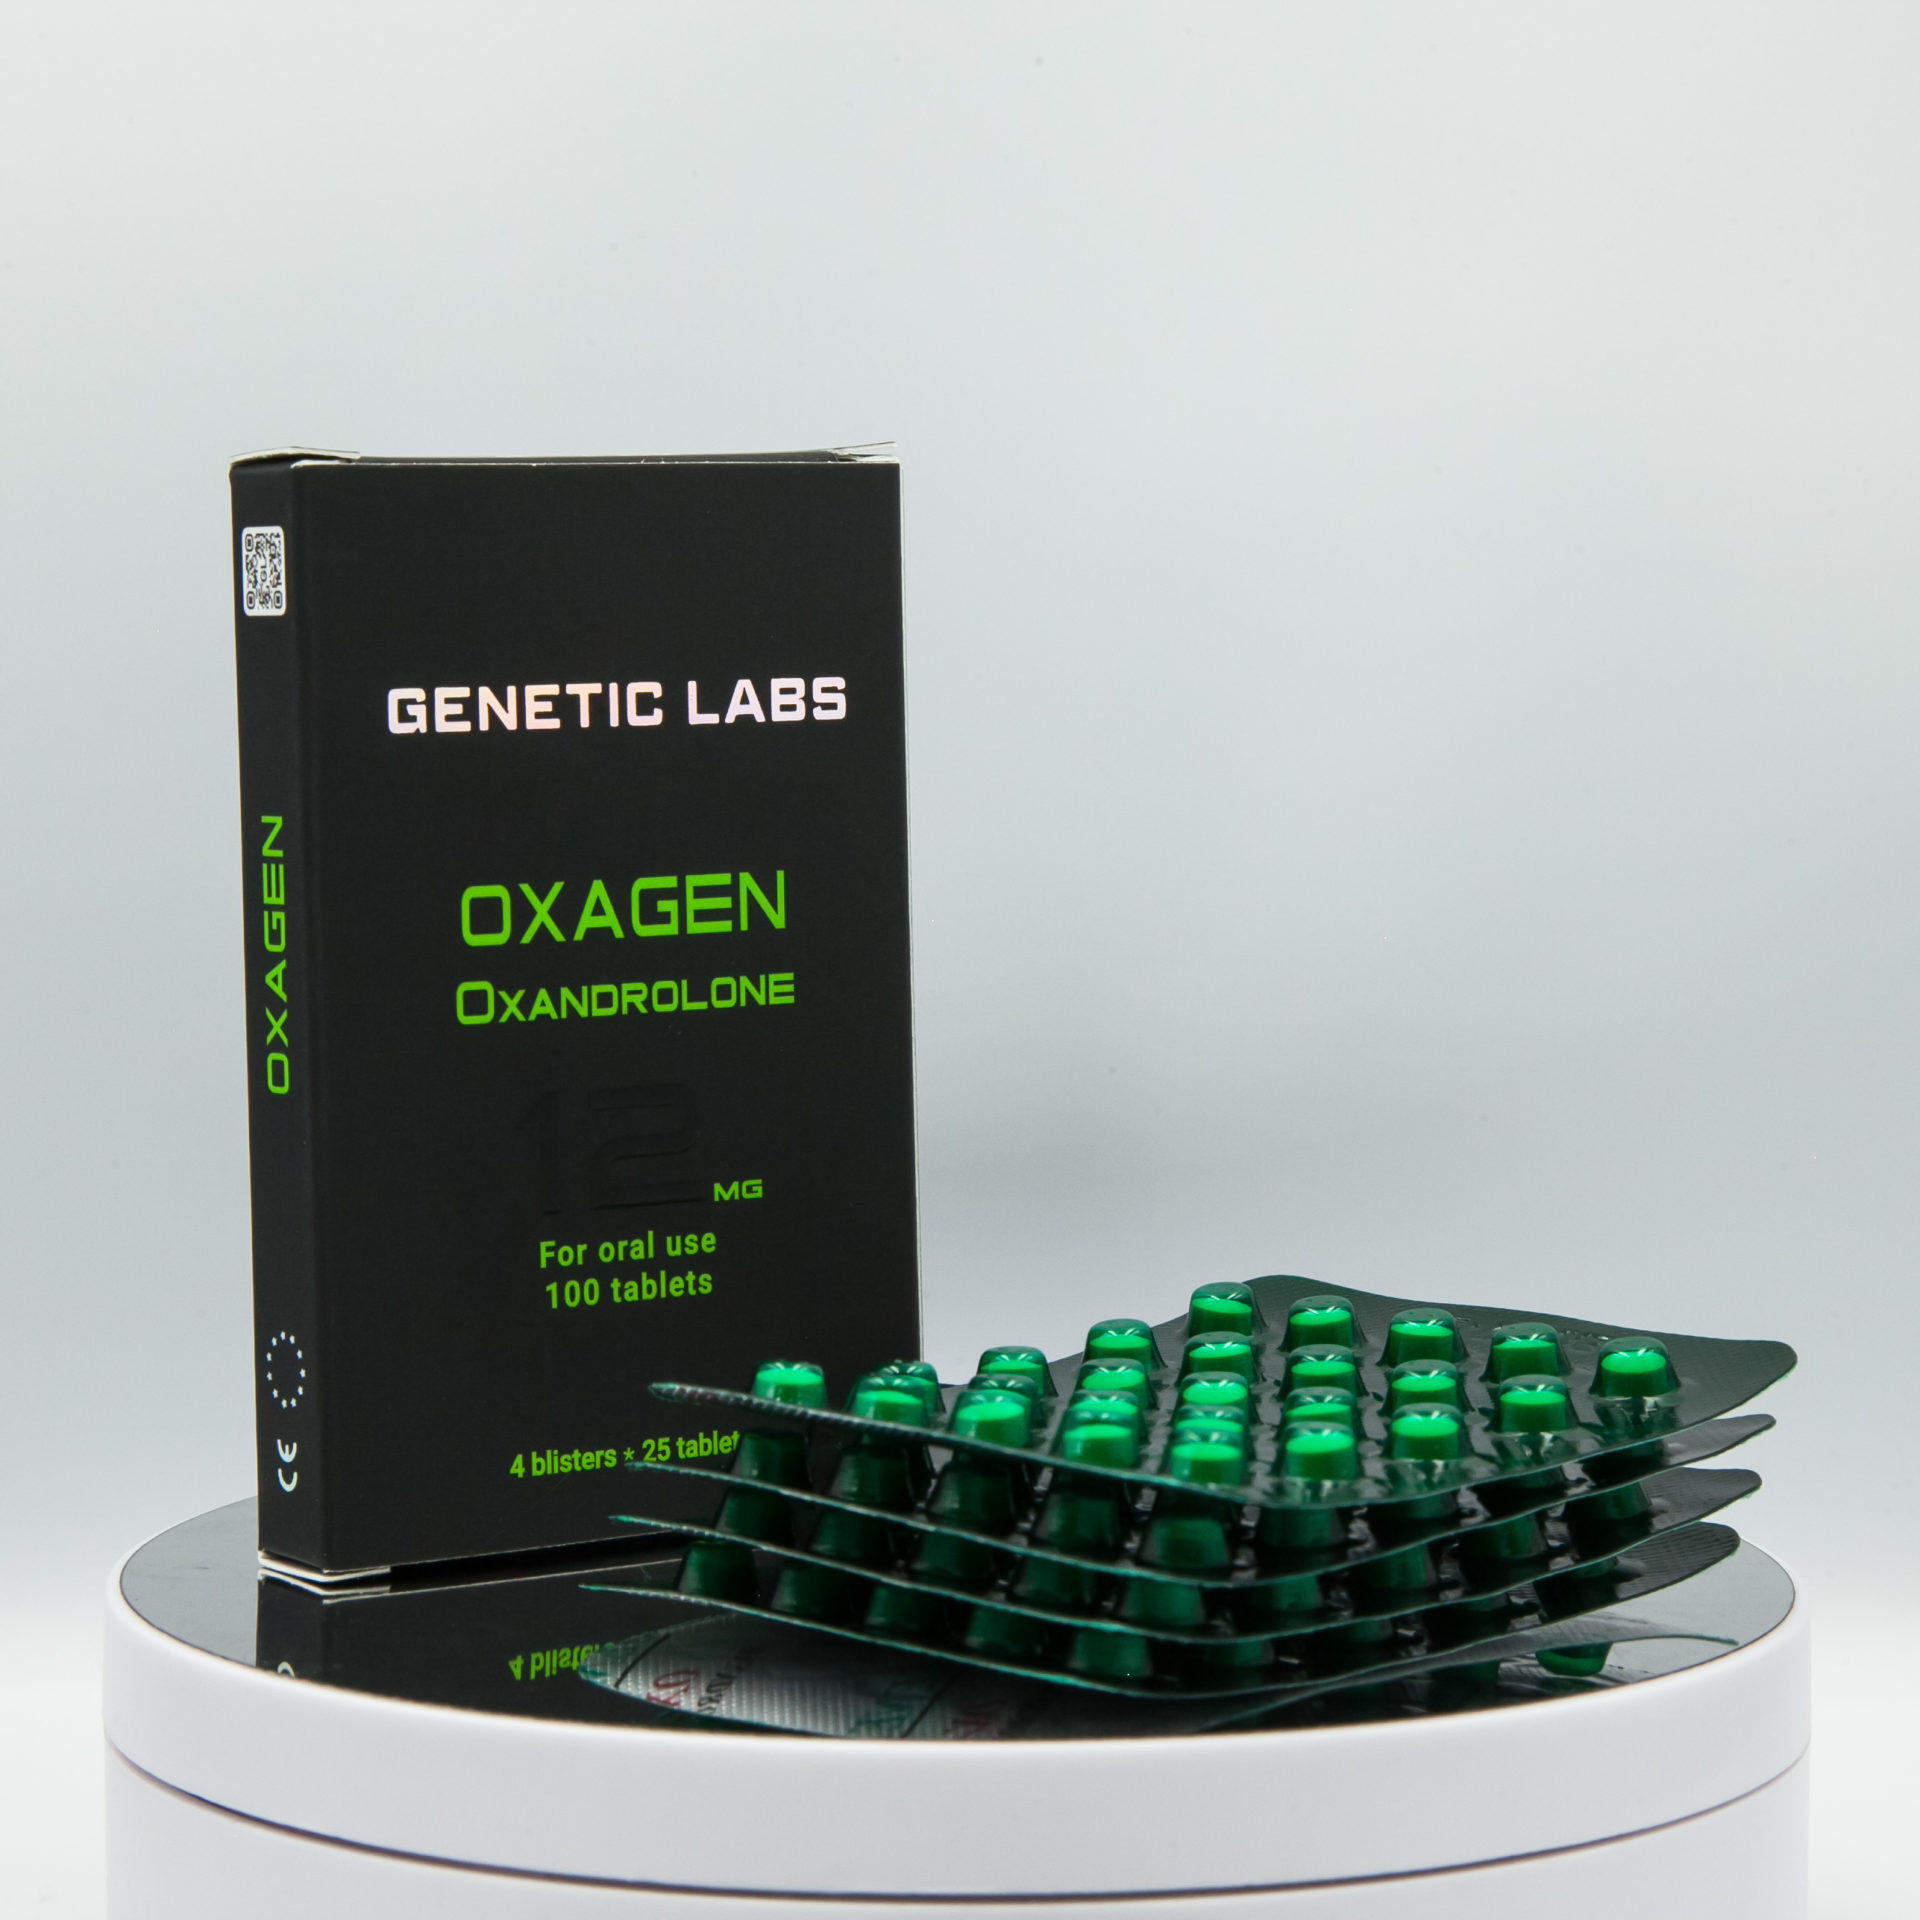 Oxagen 12 mg Genetic Labs Oxandrolone 3